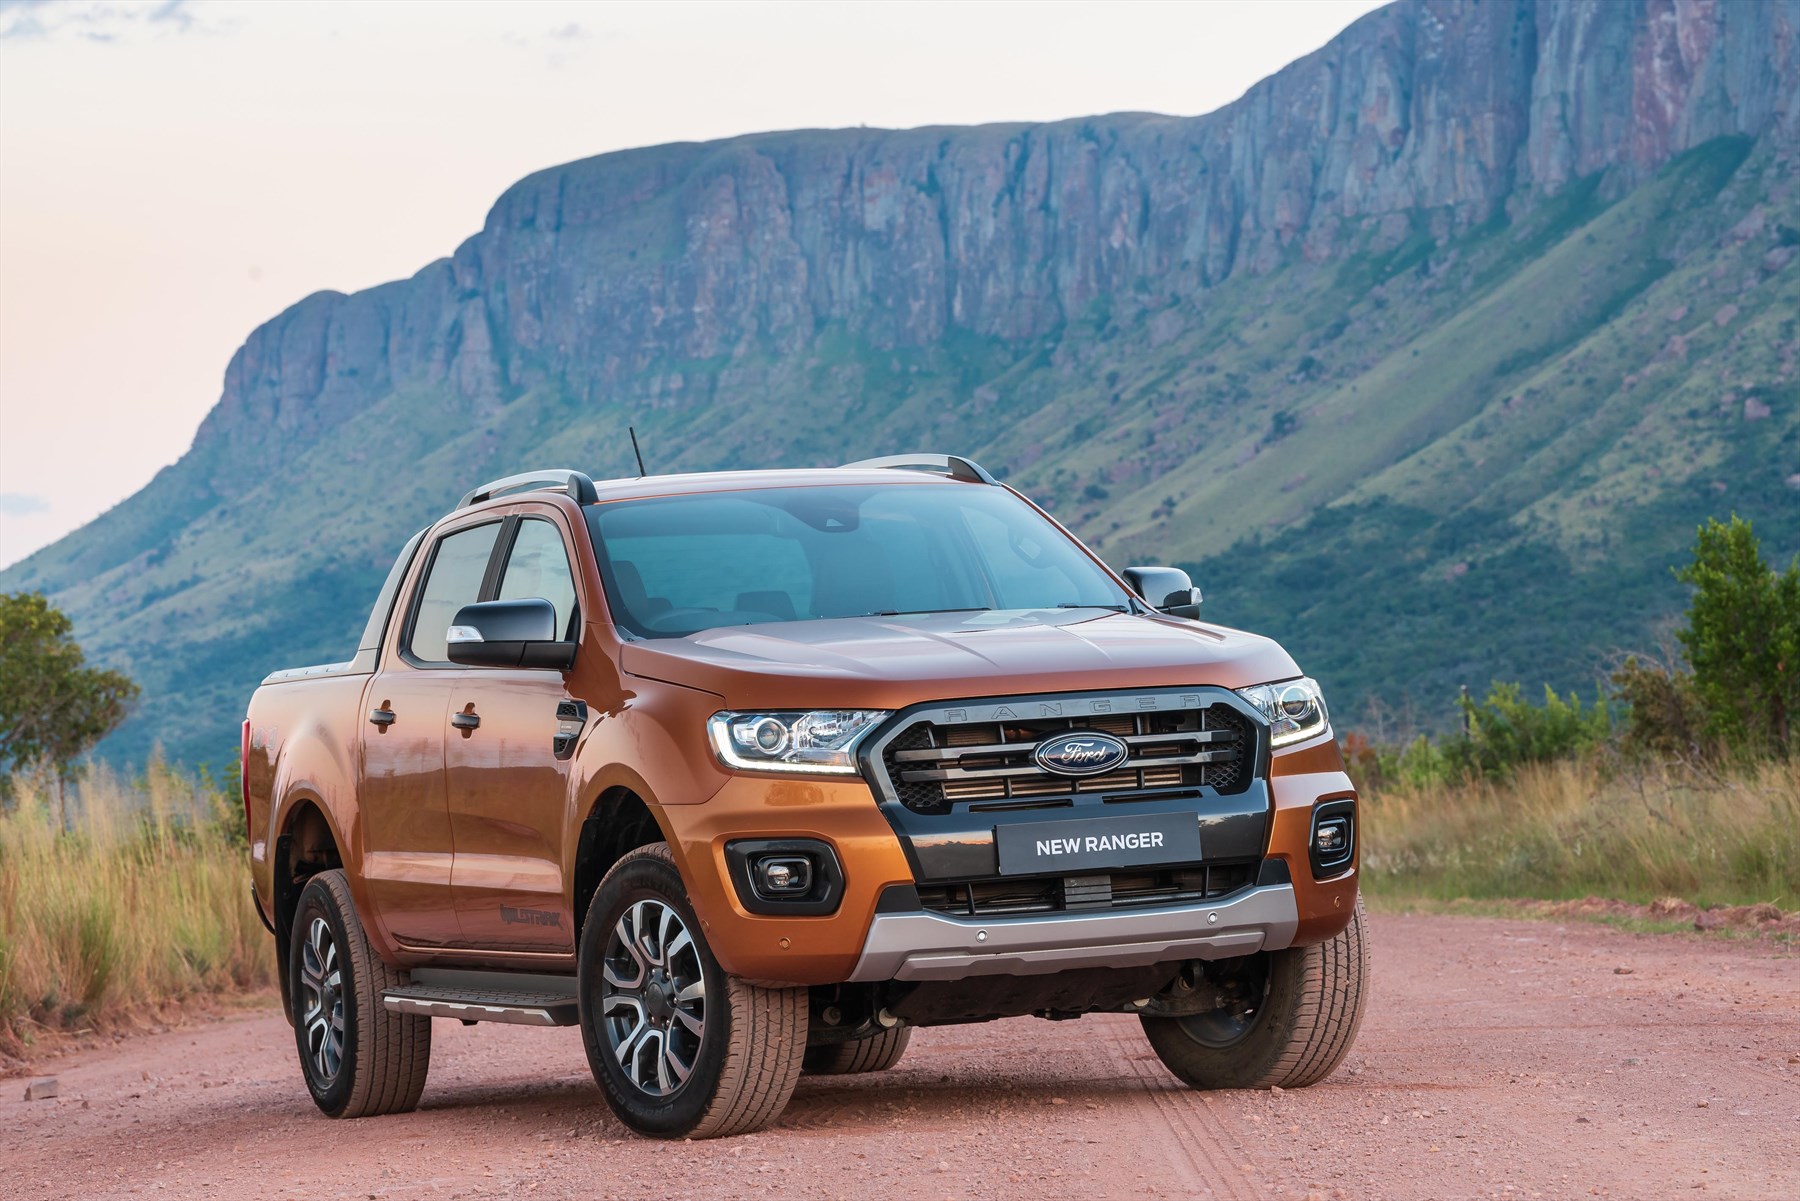 Ford Ranger Wins Coveted International Pick-up Award